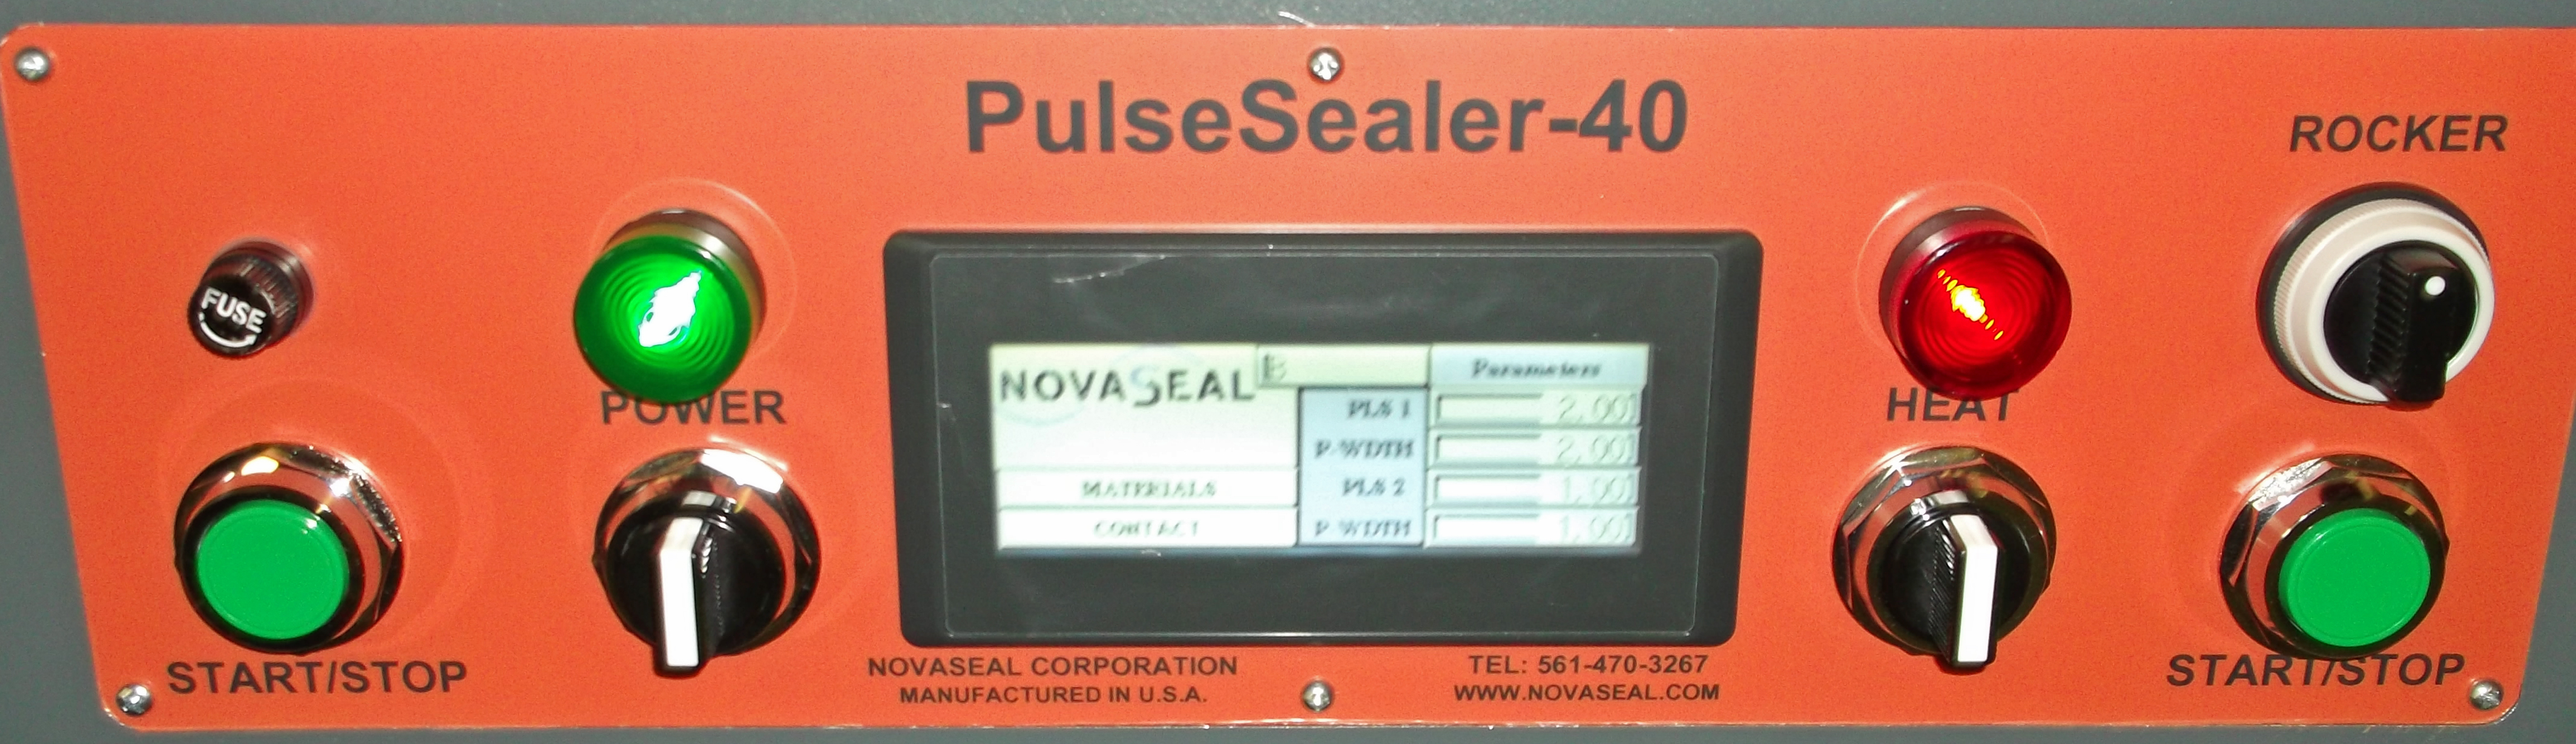 Novaseal PulseSealer